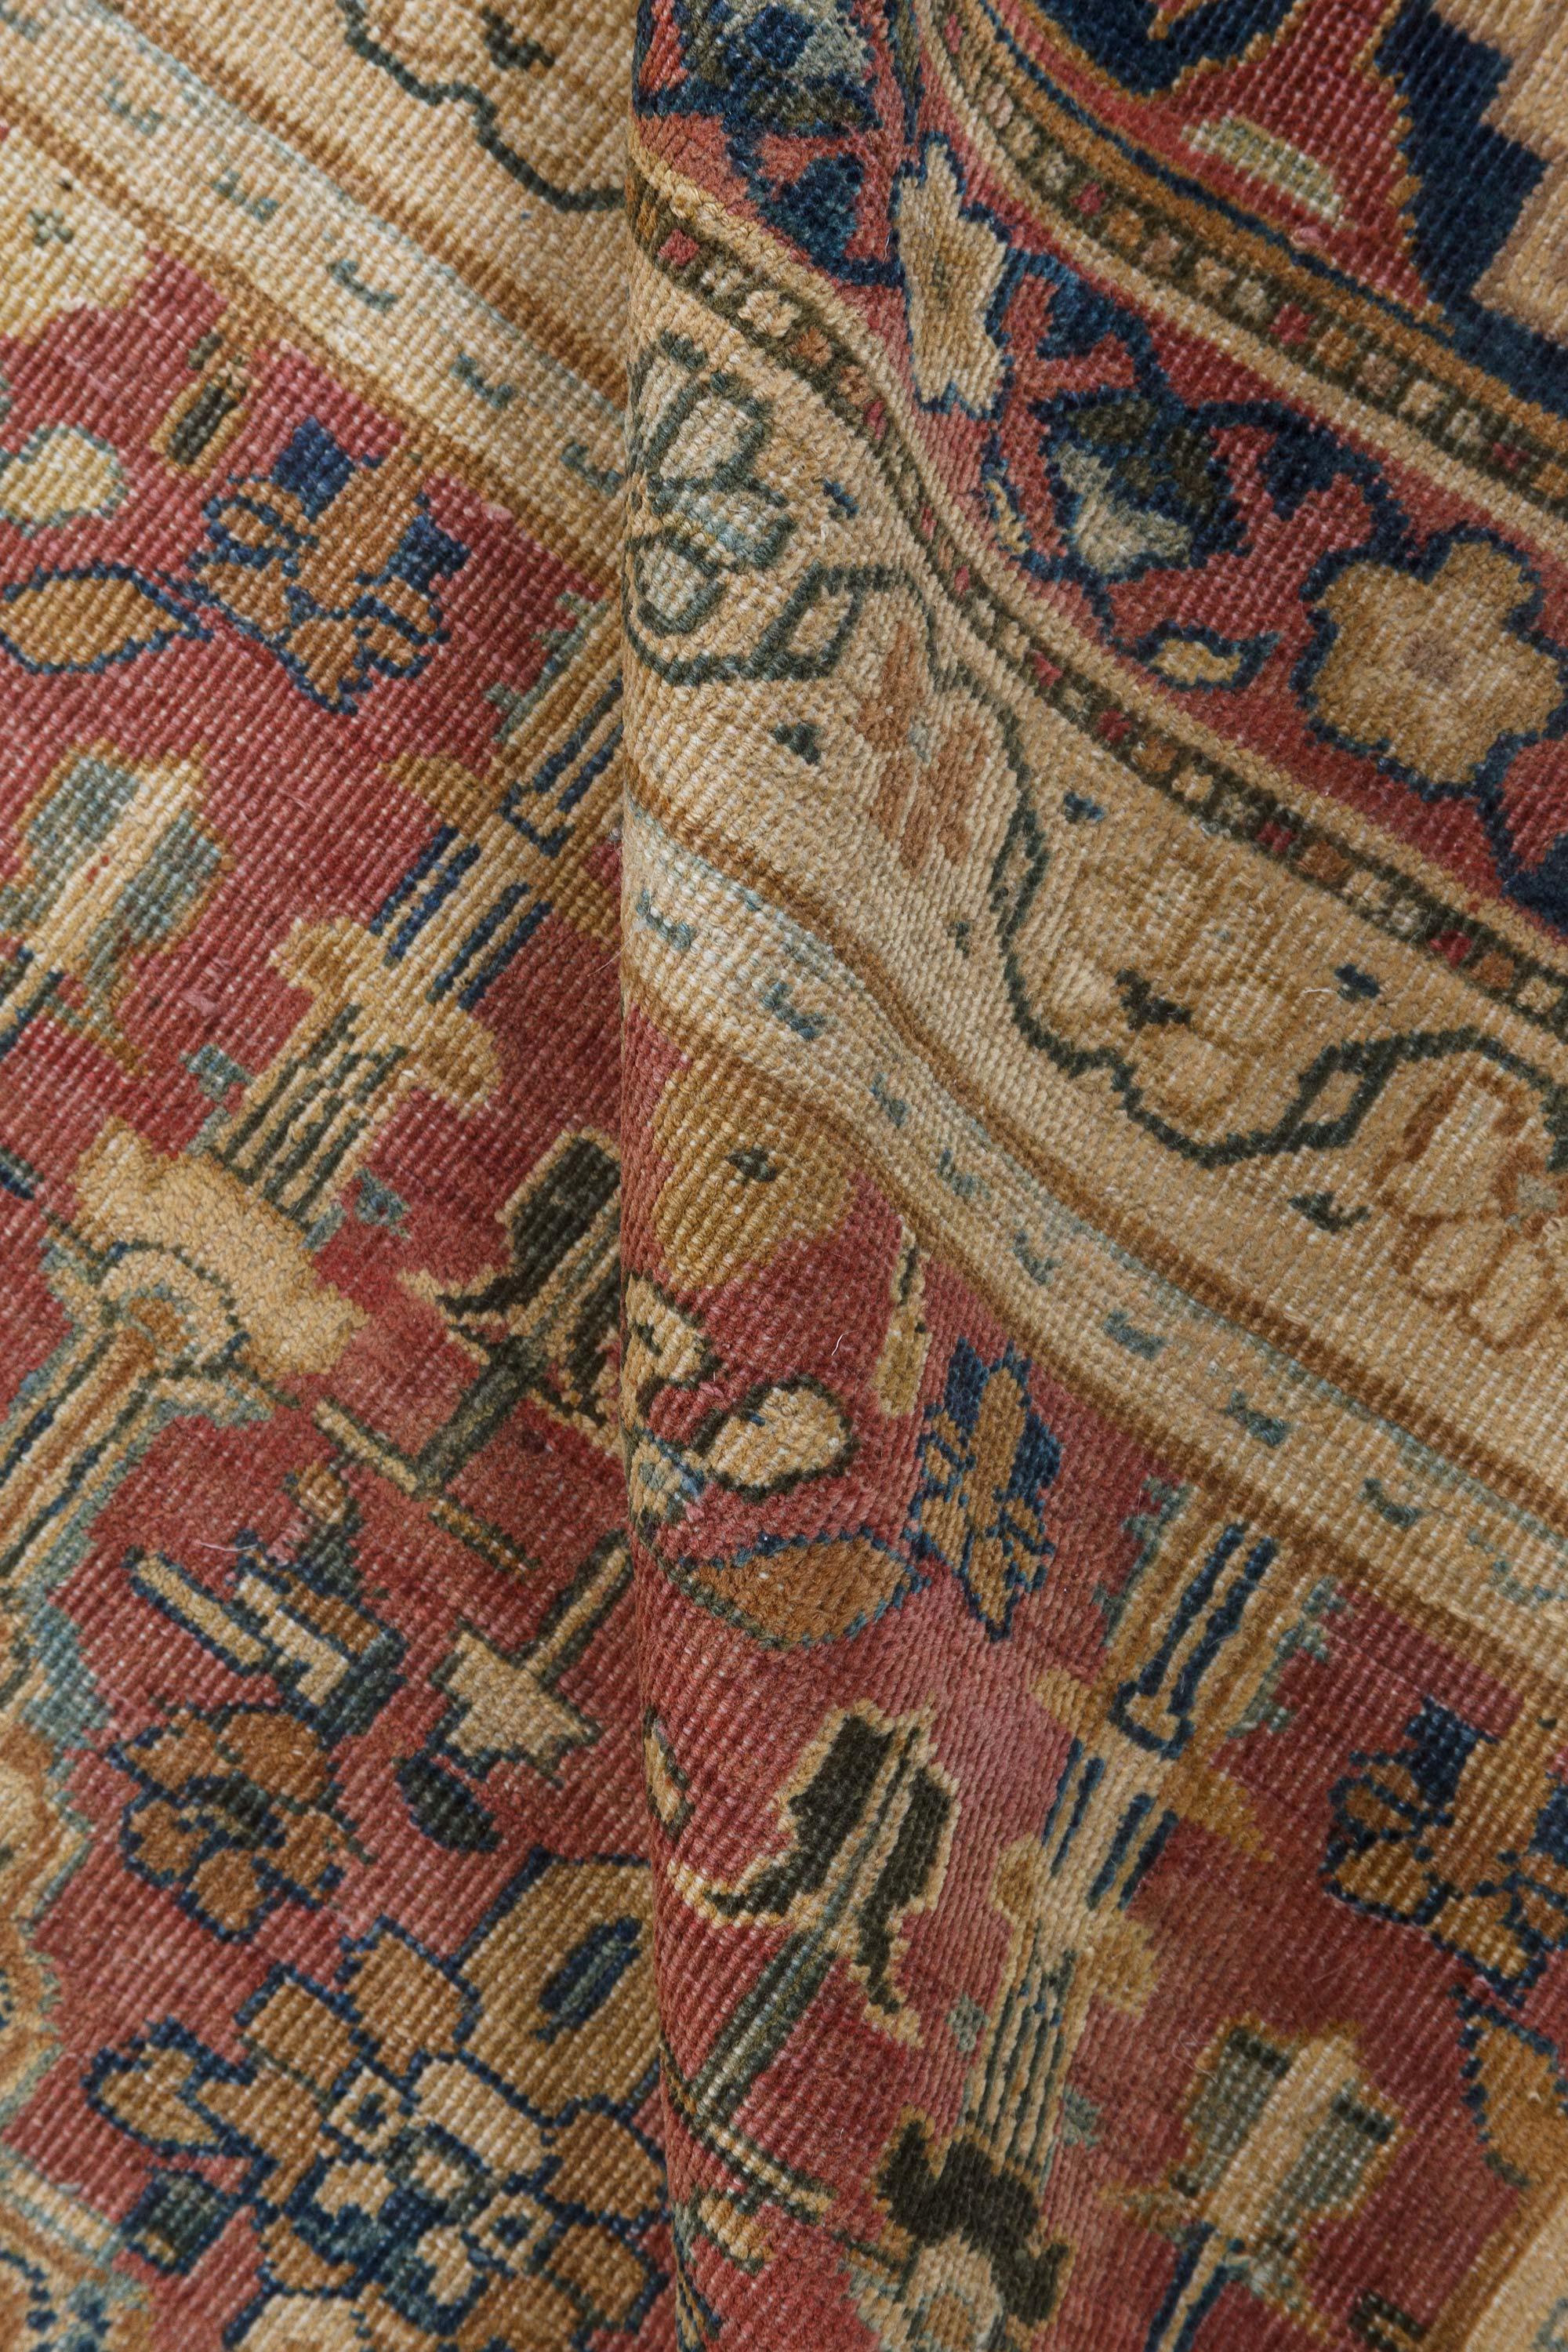 Antique Indian handmade carpet
Size: 12'2